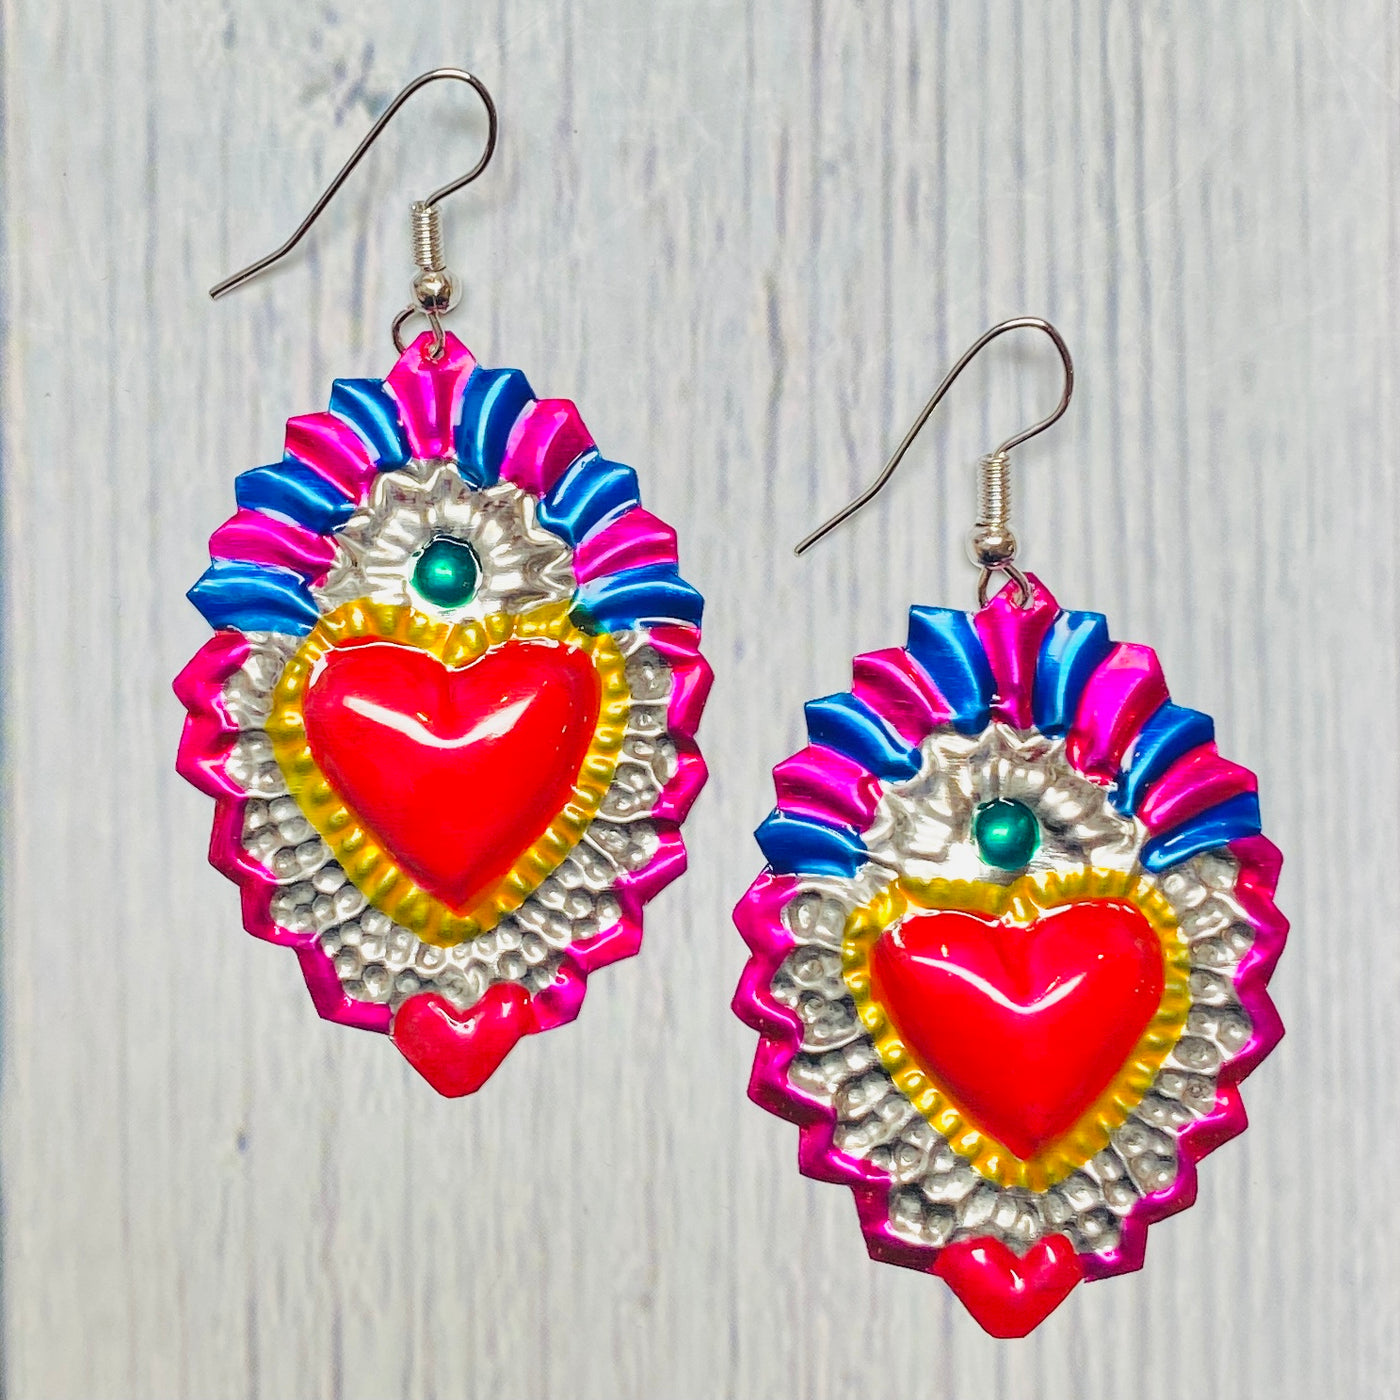 Colorful tin sacred heart earrings.